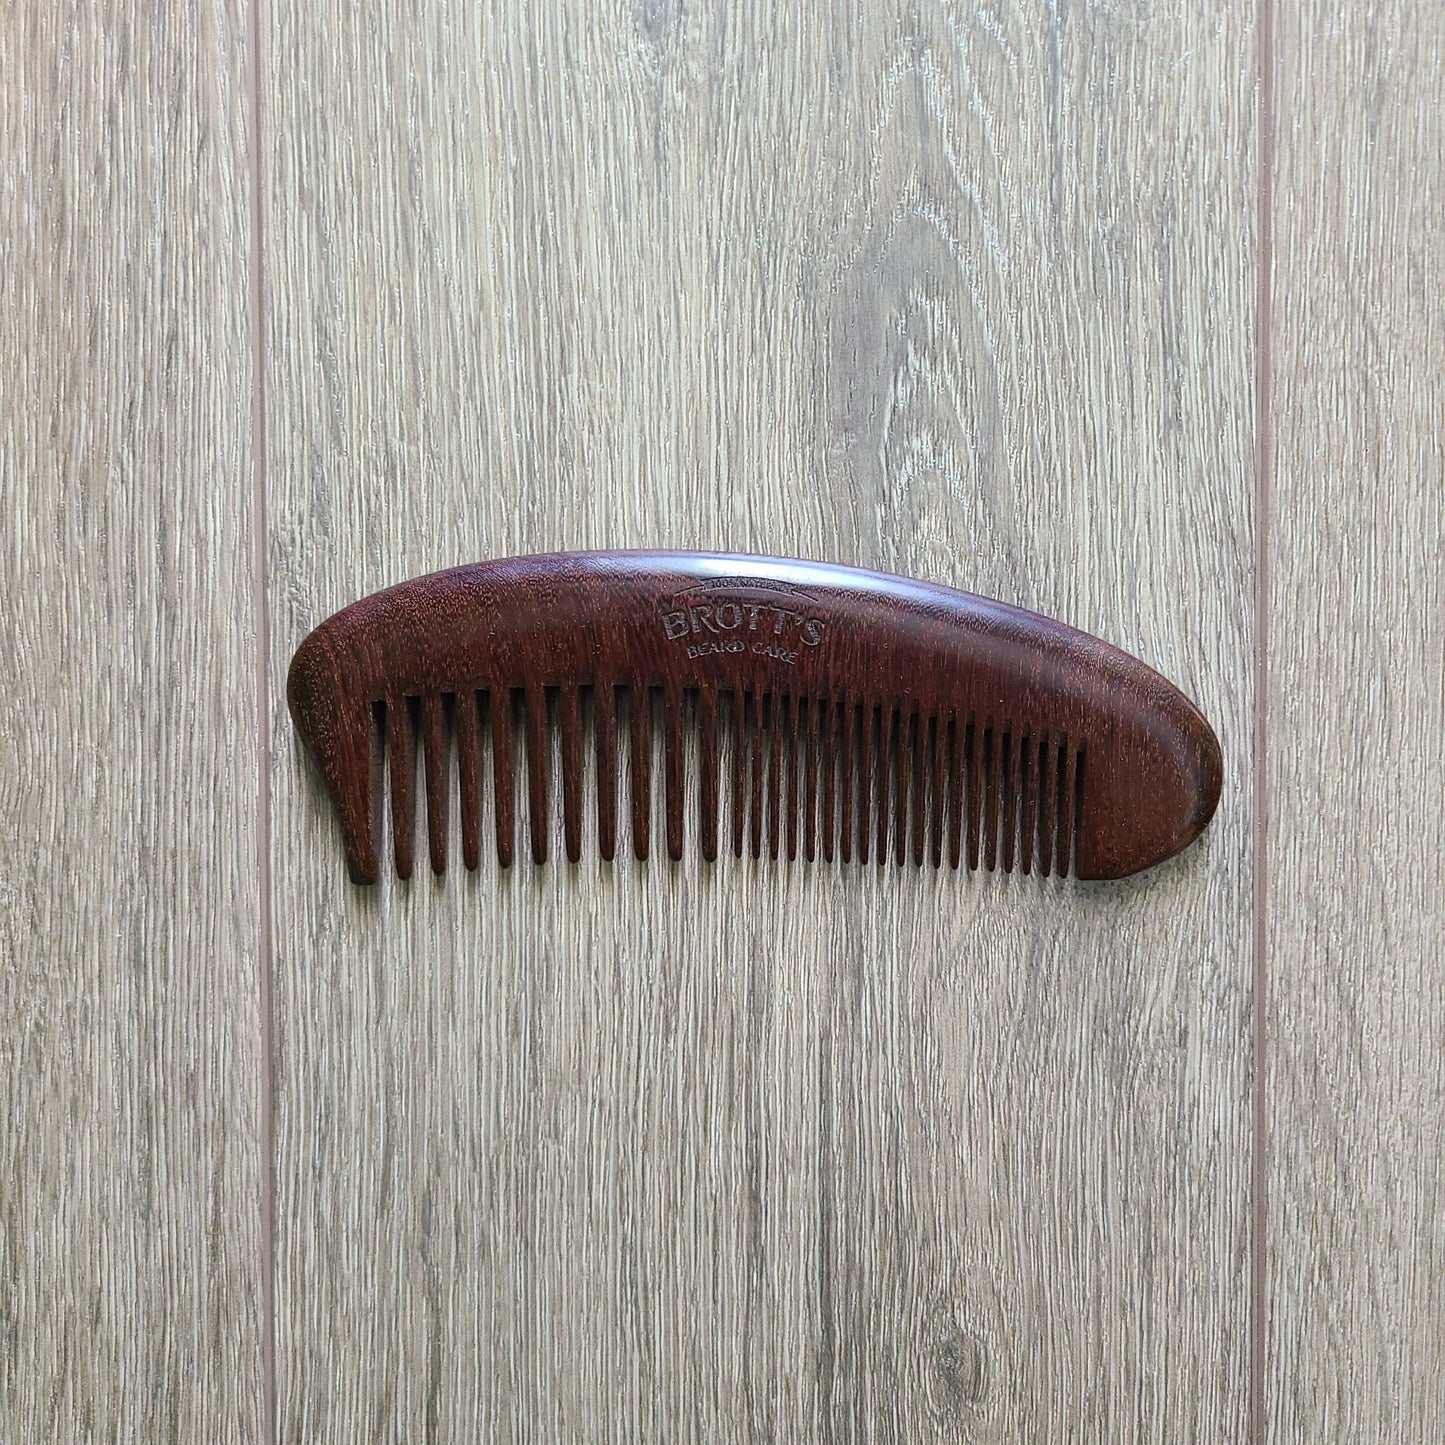 Sandalwood beard comb 6.5 inches